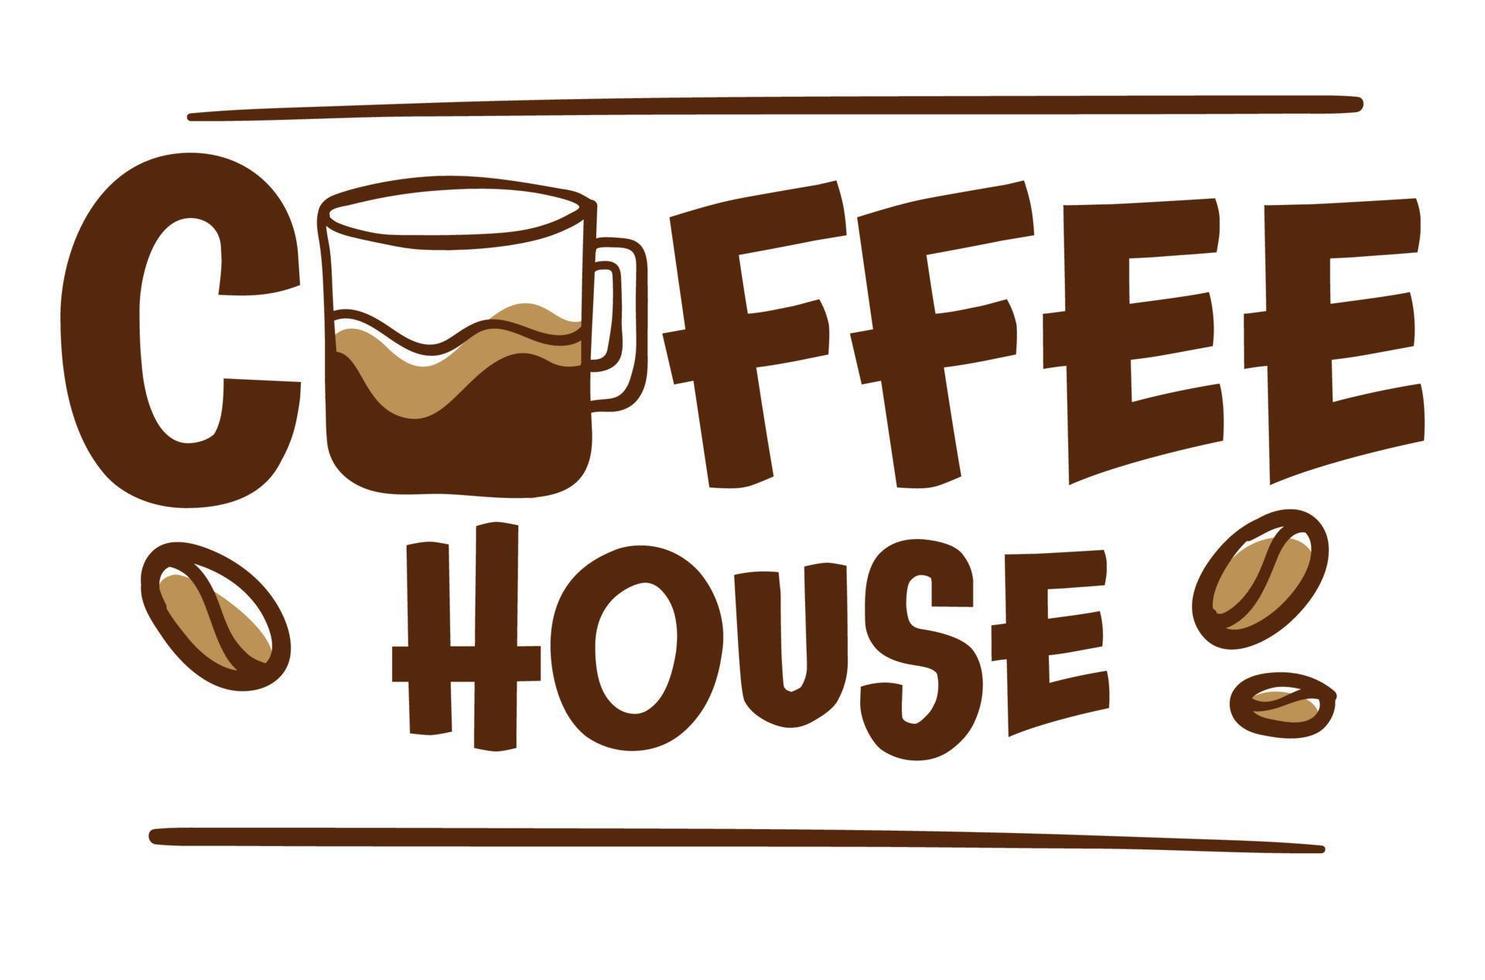 Coffee house drink espresso, cafe or restaurant vector